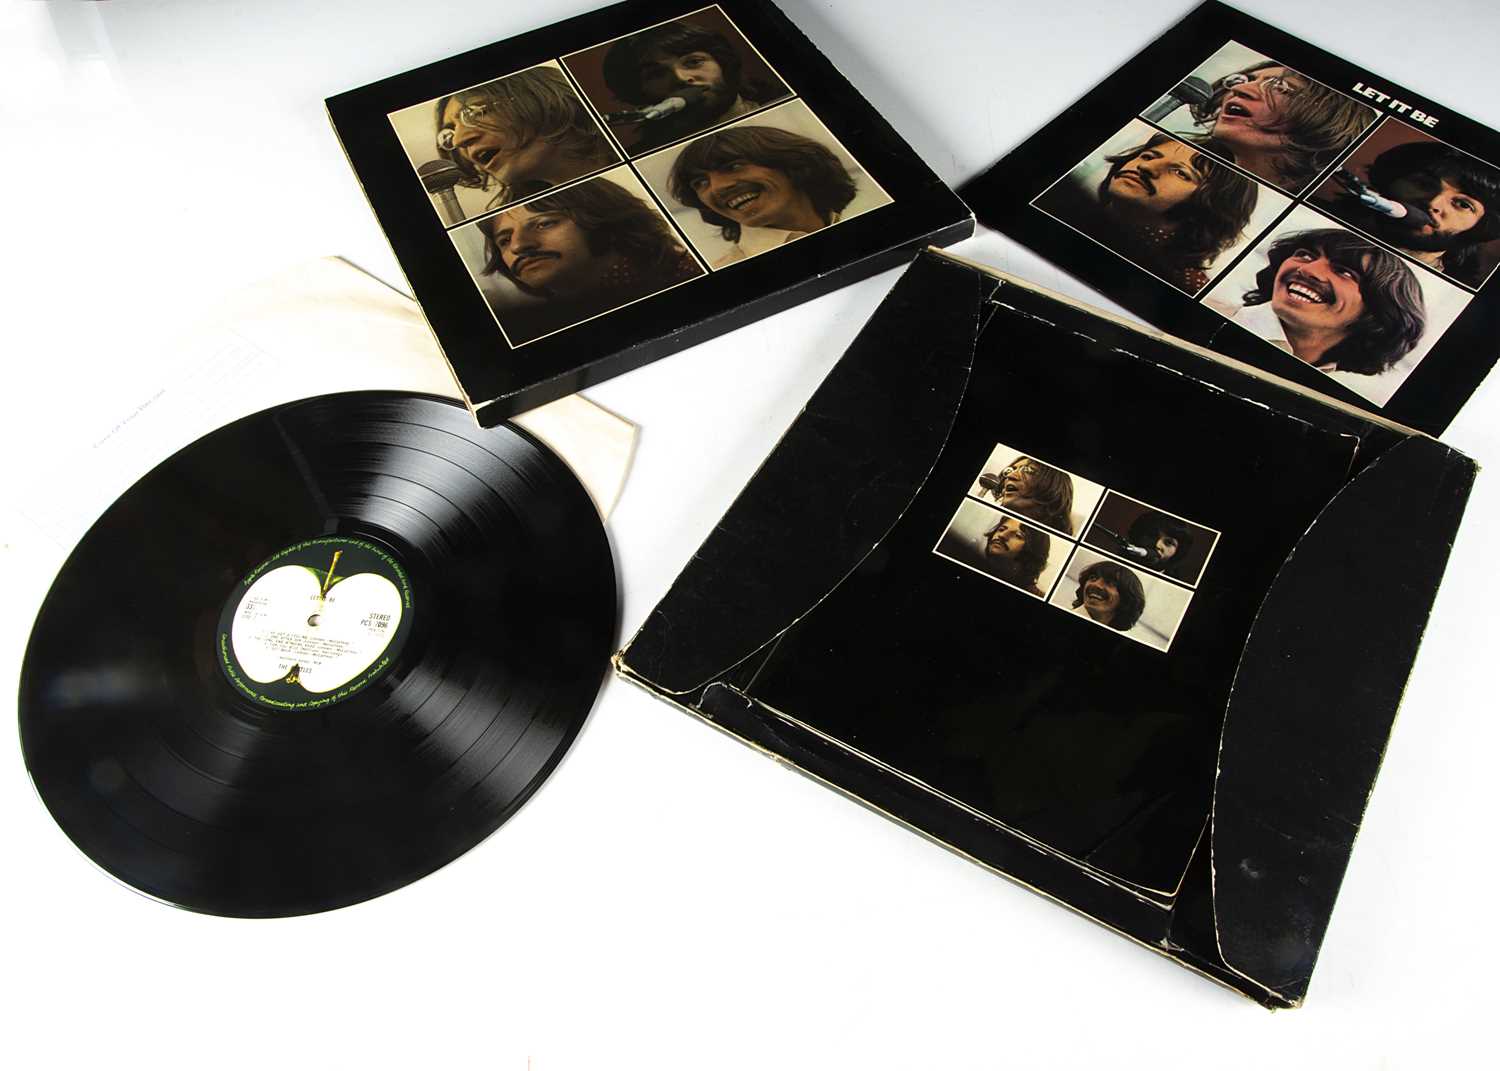 Lot 2 - The Beatles Box Set